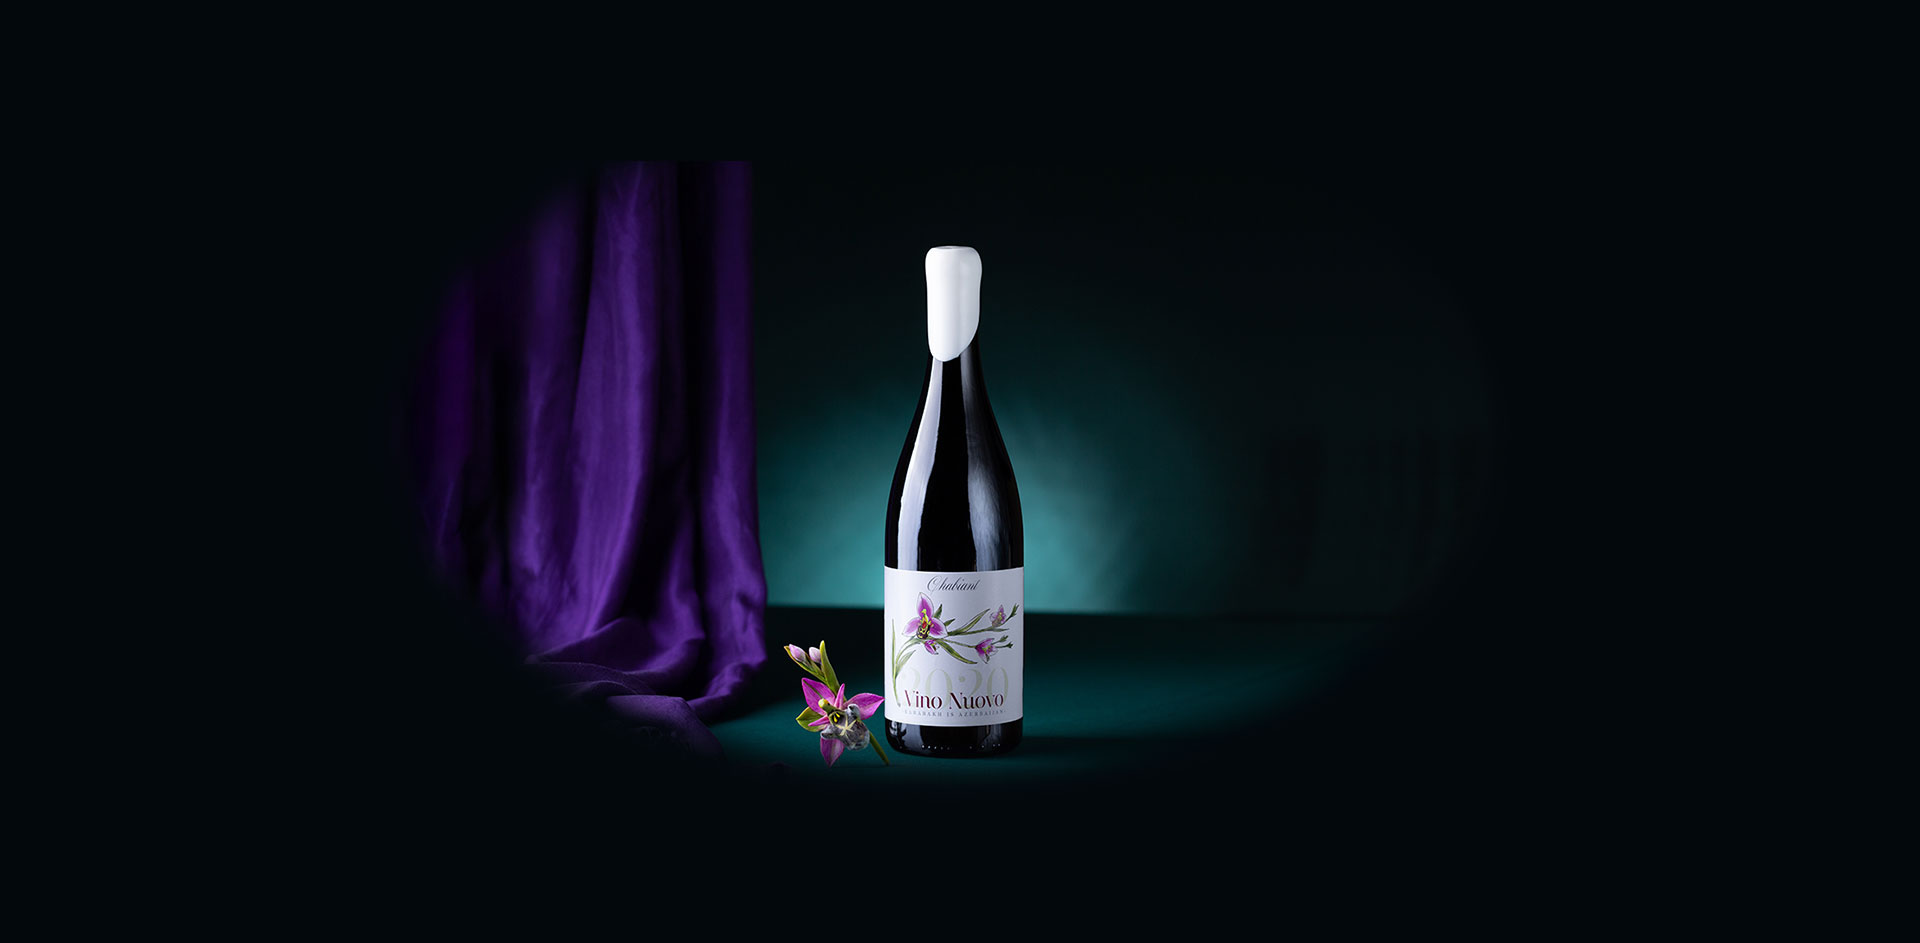 Chabiant.az Вебсайт винного бренда Chabiant и винодельни Ismayilli Sharab-2